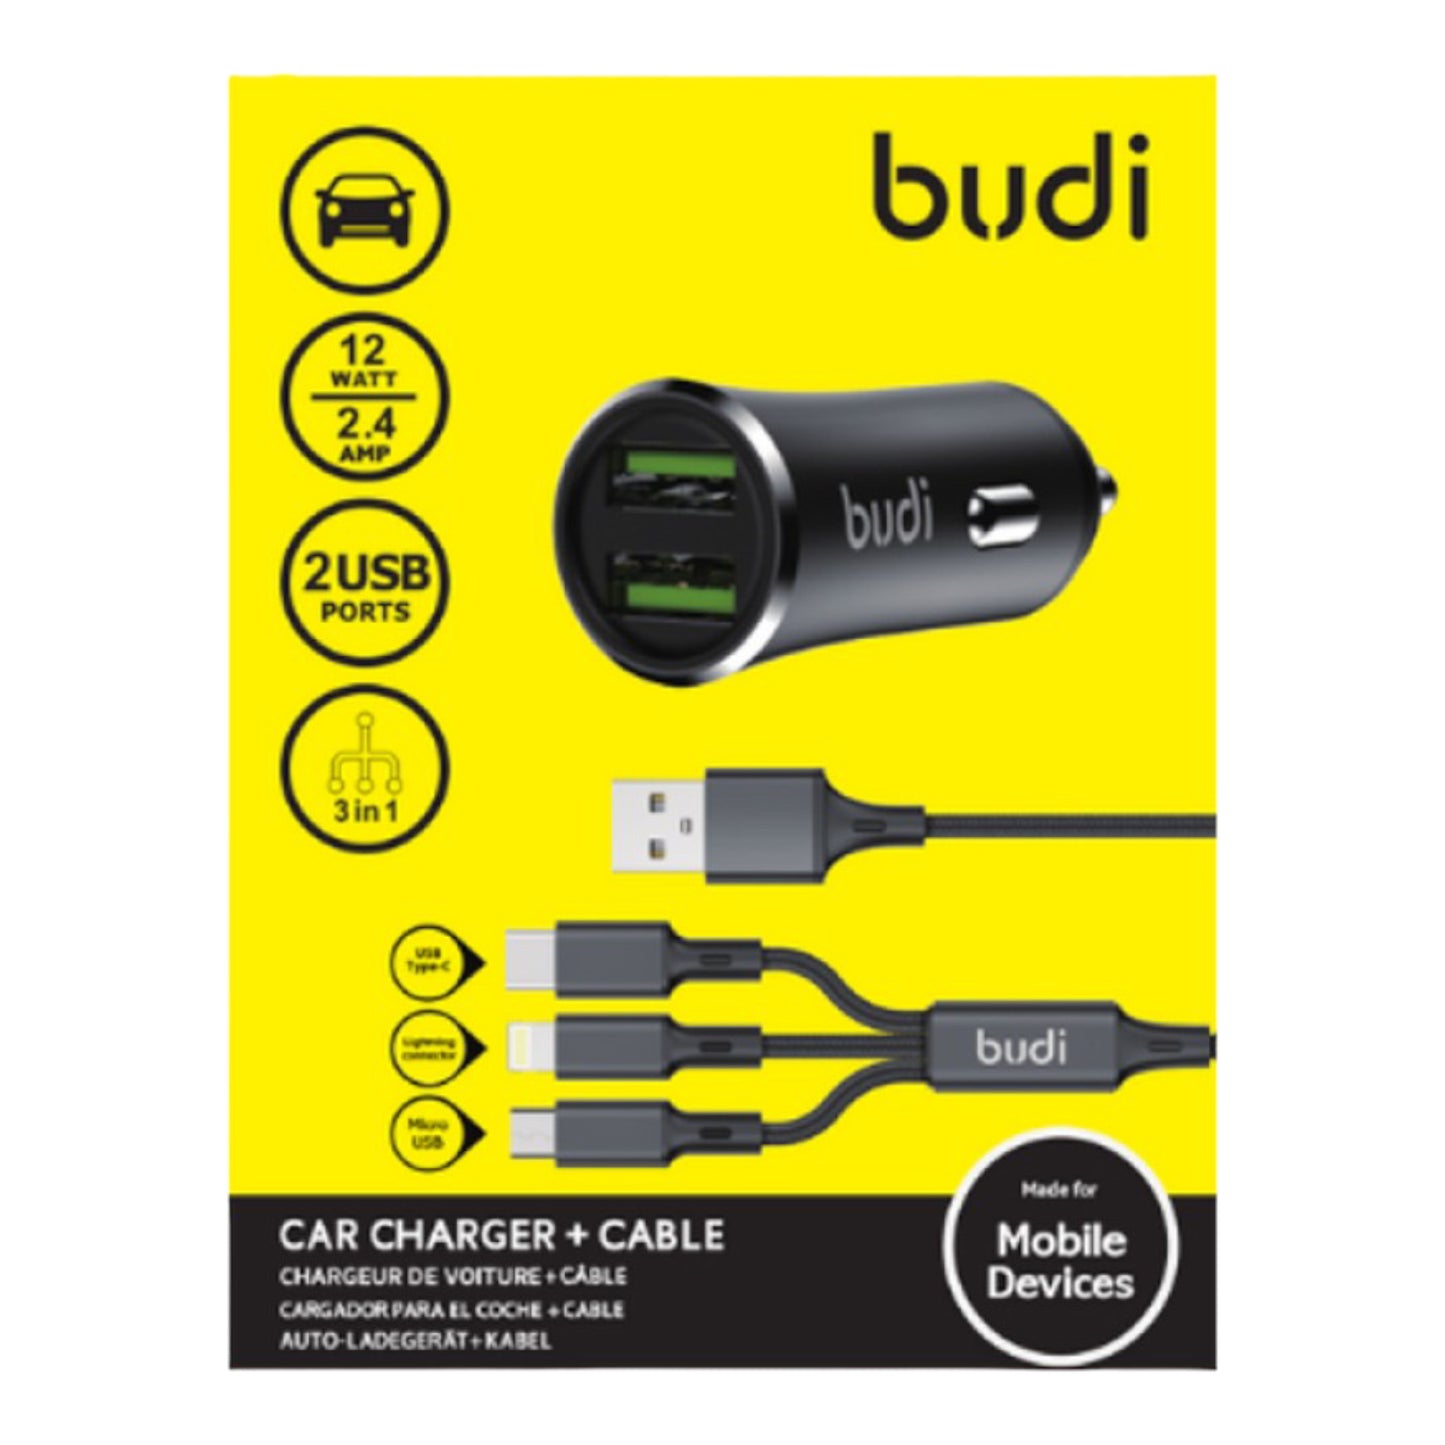 Budi car charger + cable (627t3) شاحن سيارة جميع المداخل